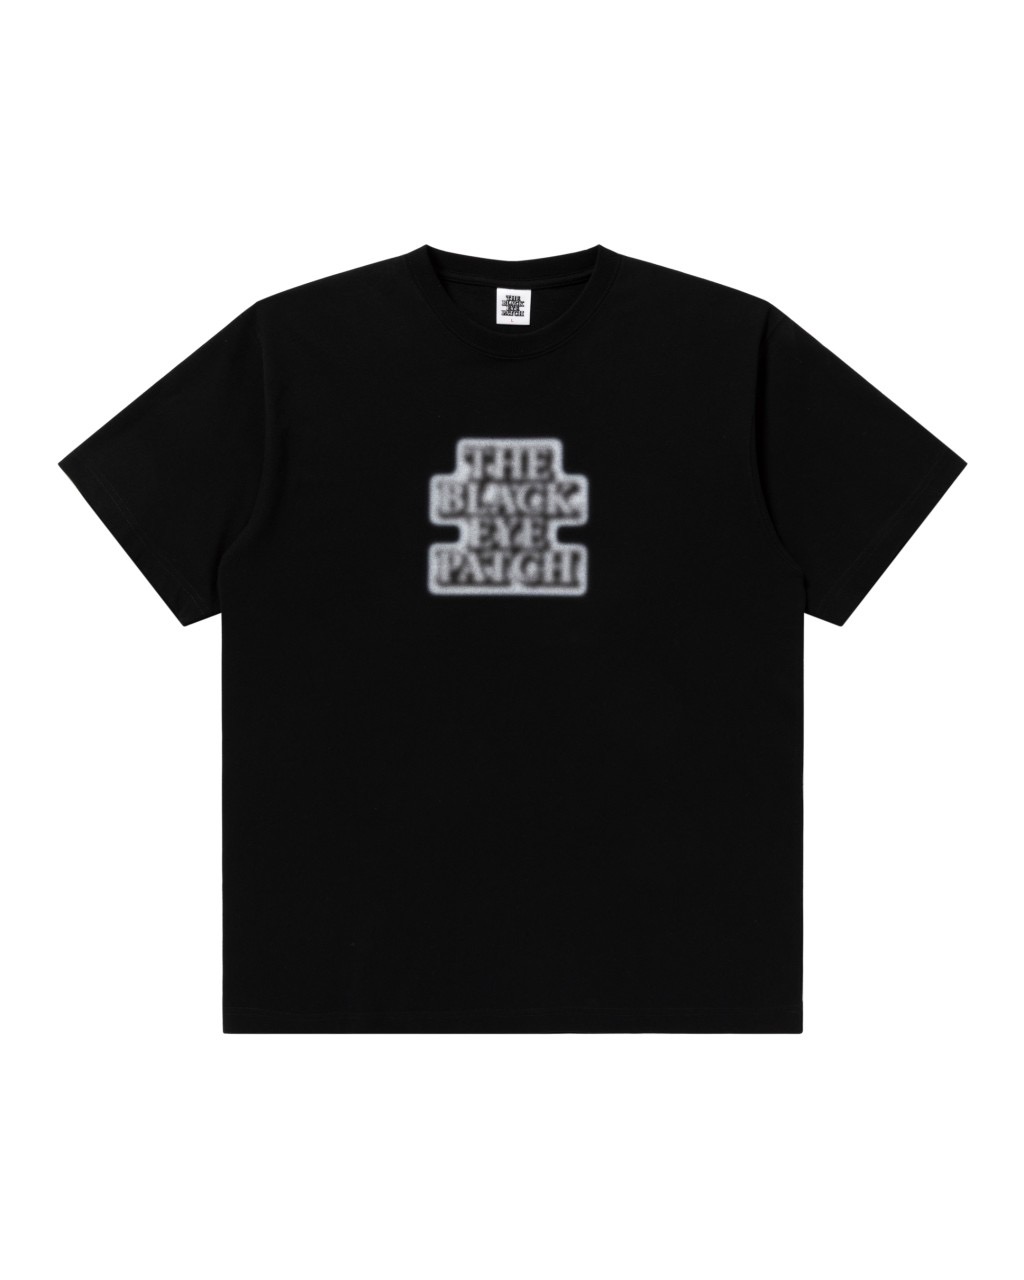 BlackEyePatch(ブラックアイパッチ)半袖 Tシャツ 未使用品 XL-